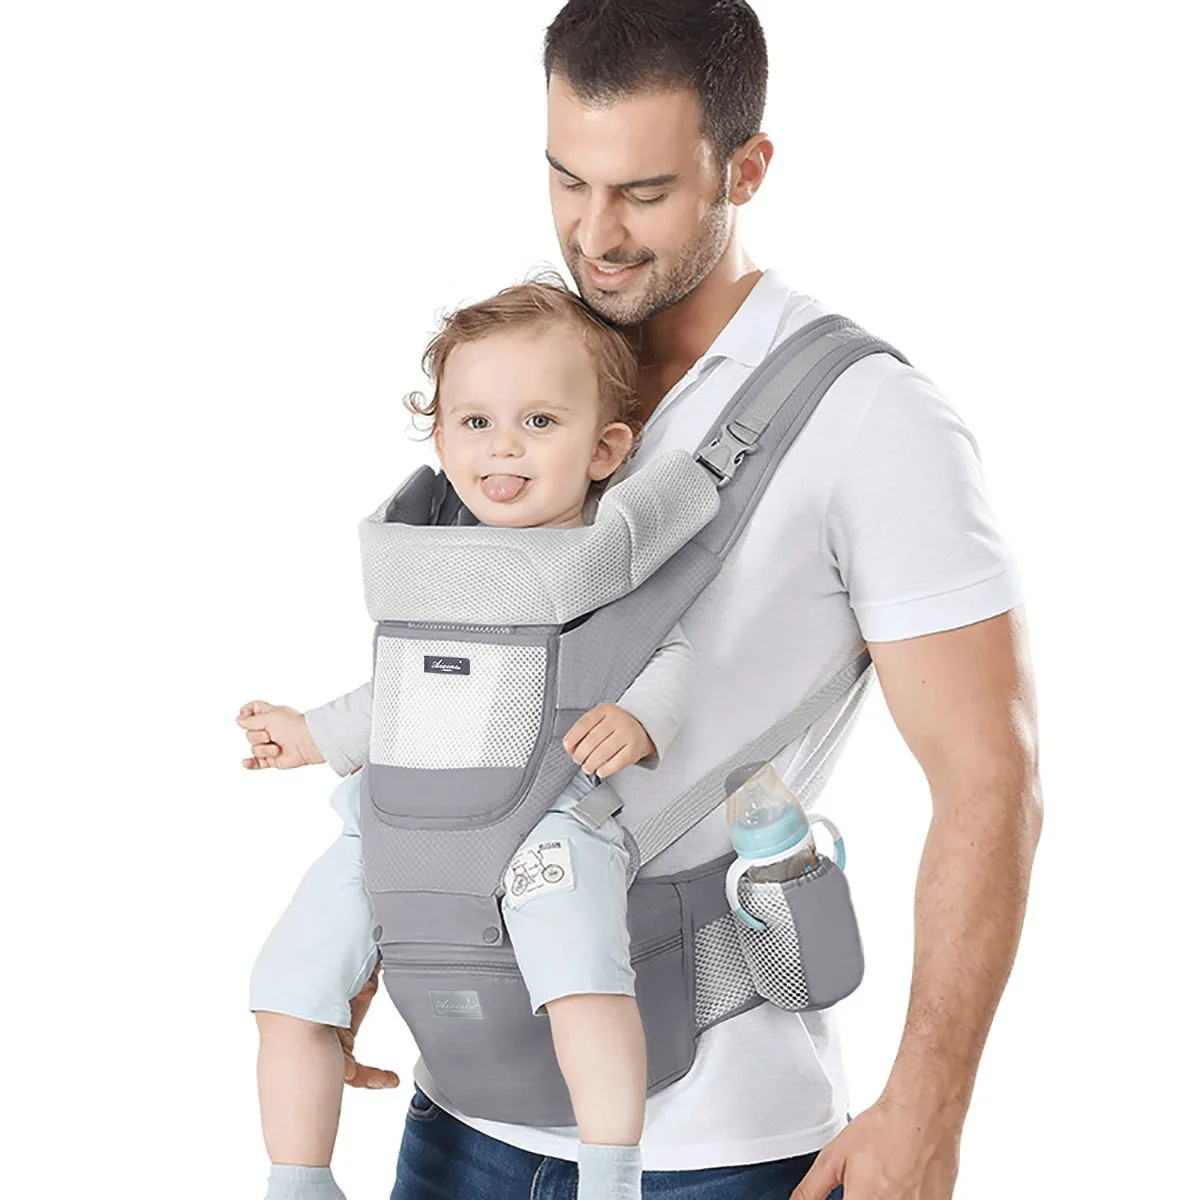 Детска переноска от висококачествен чист памук - удобно носене на вашето бебе 0-36 месеца!2